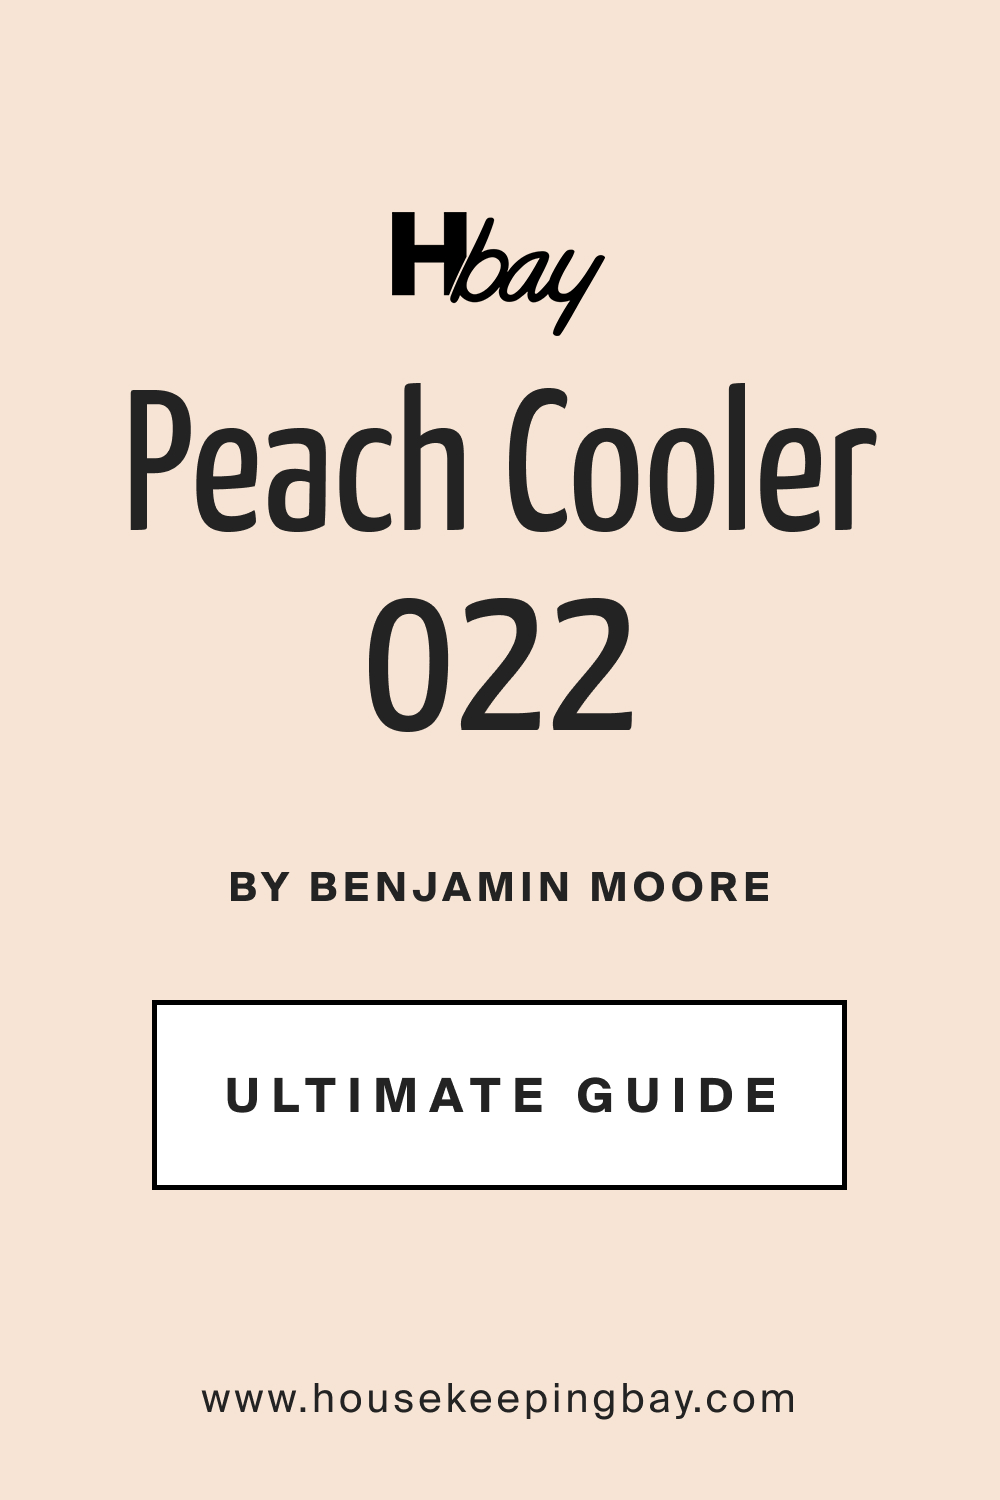 Peach Cooler 022 by Benjamin Moore Ultimate Guide